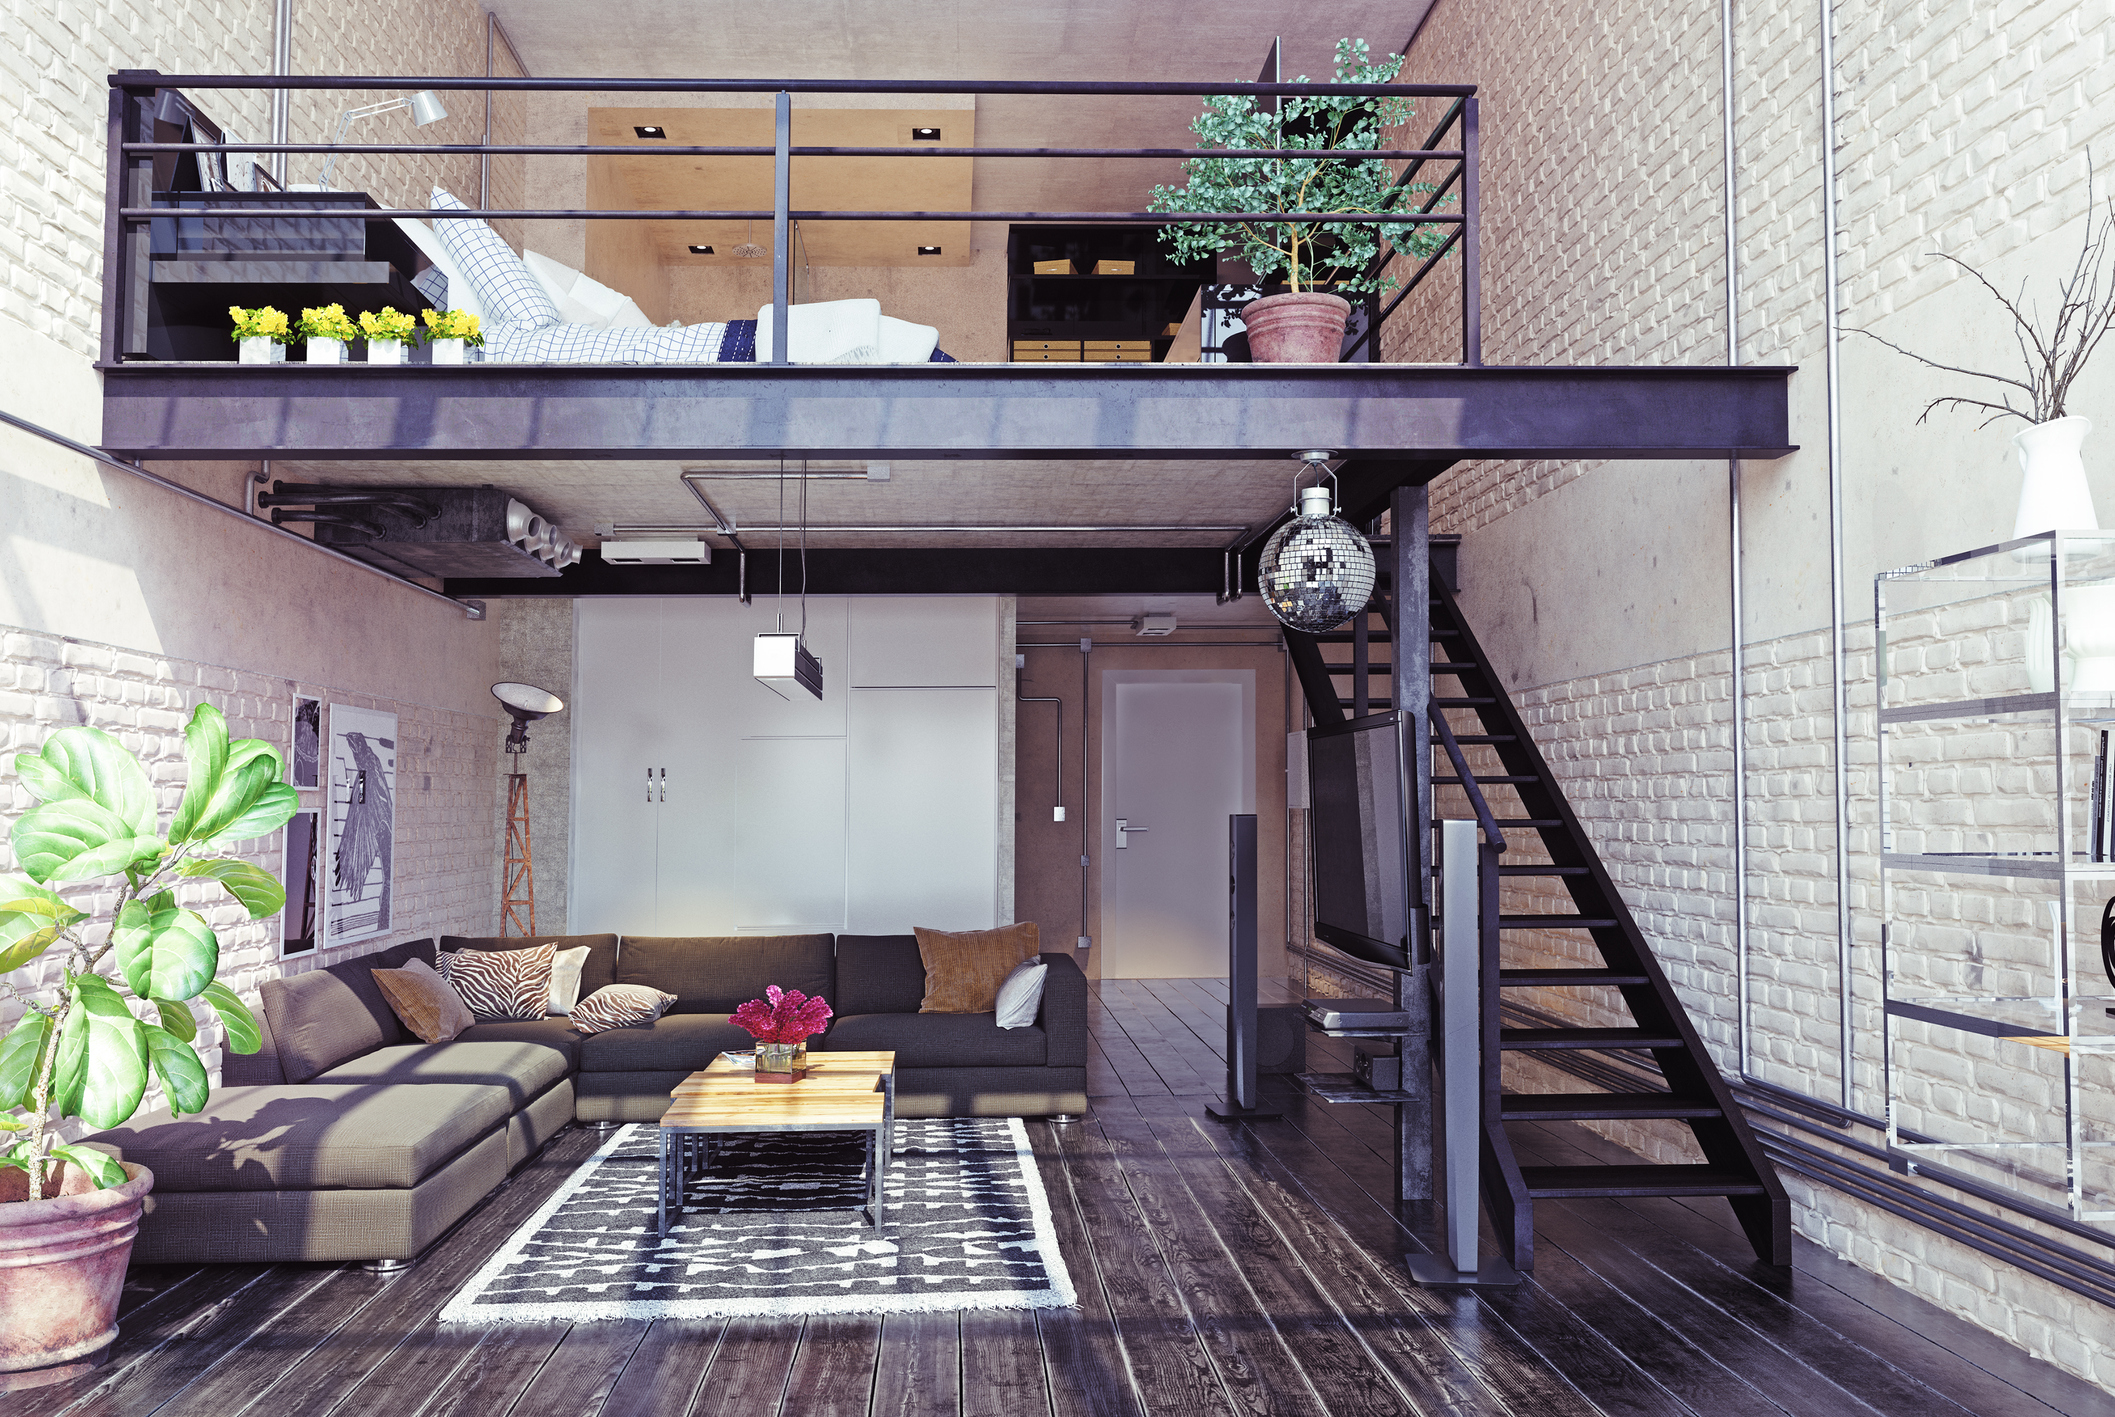 A loft apartment showcasing various industrial design features.